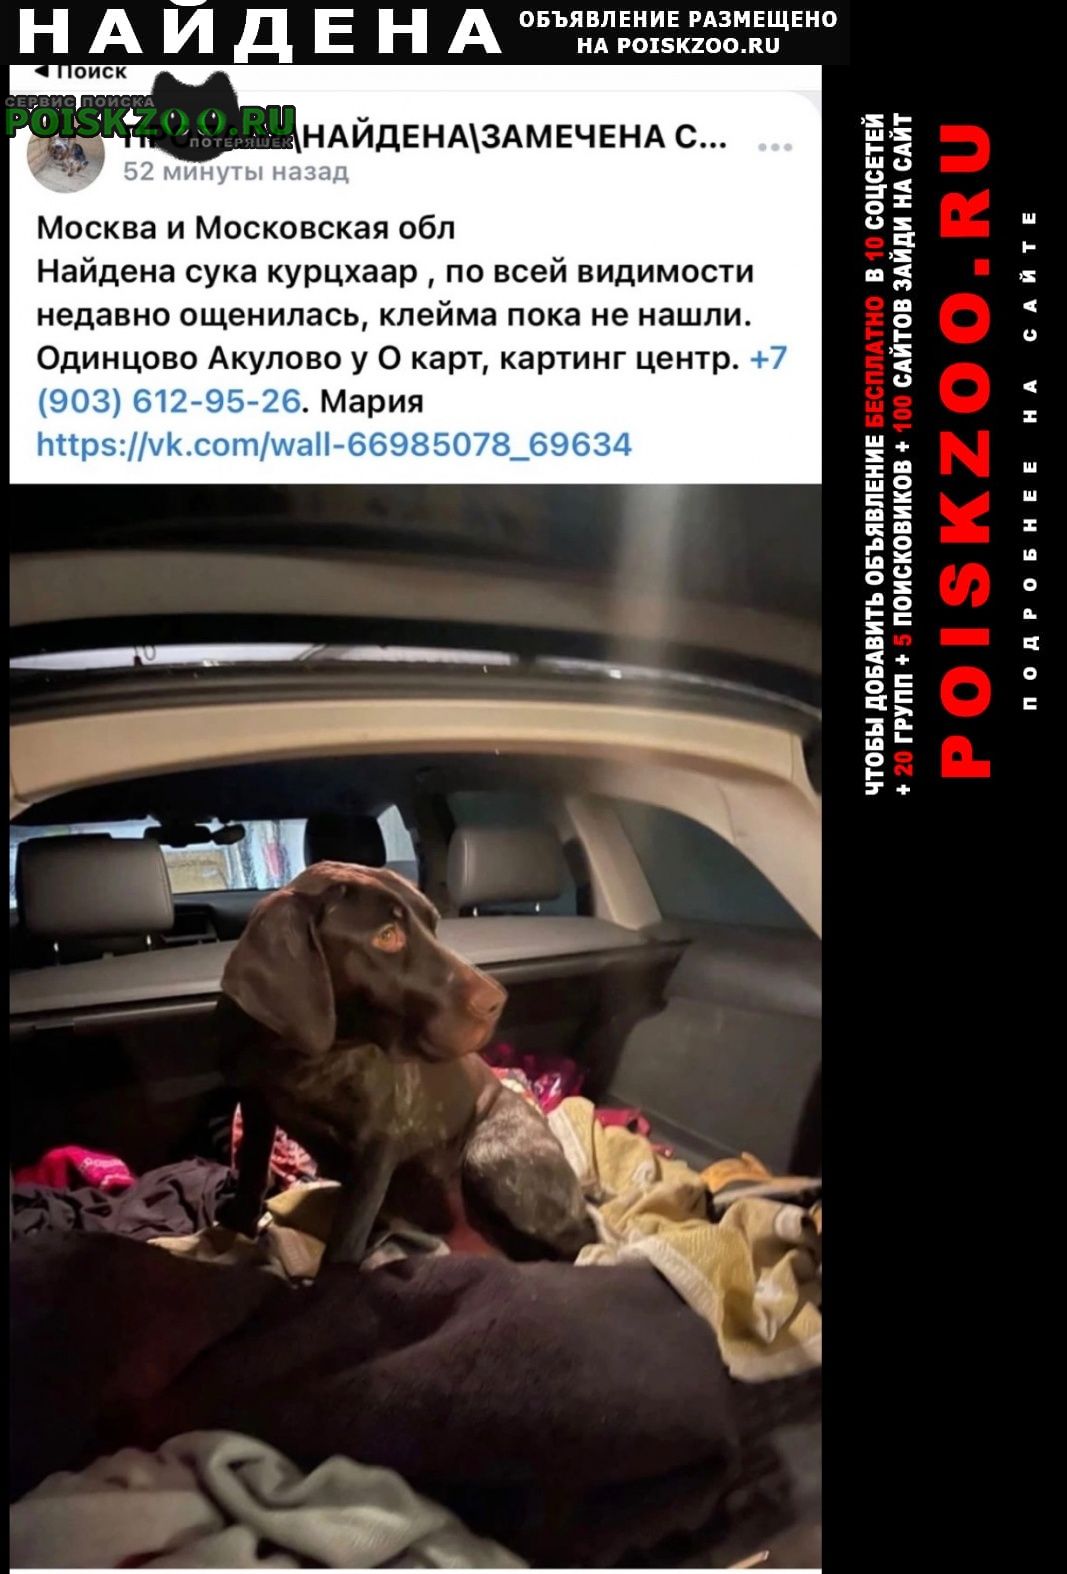 Найдена собака сука дратхаара (курцхаара?) Москва